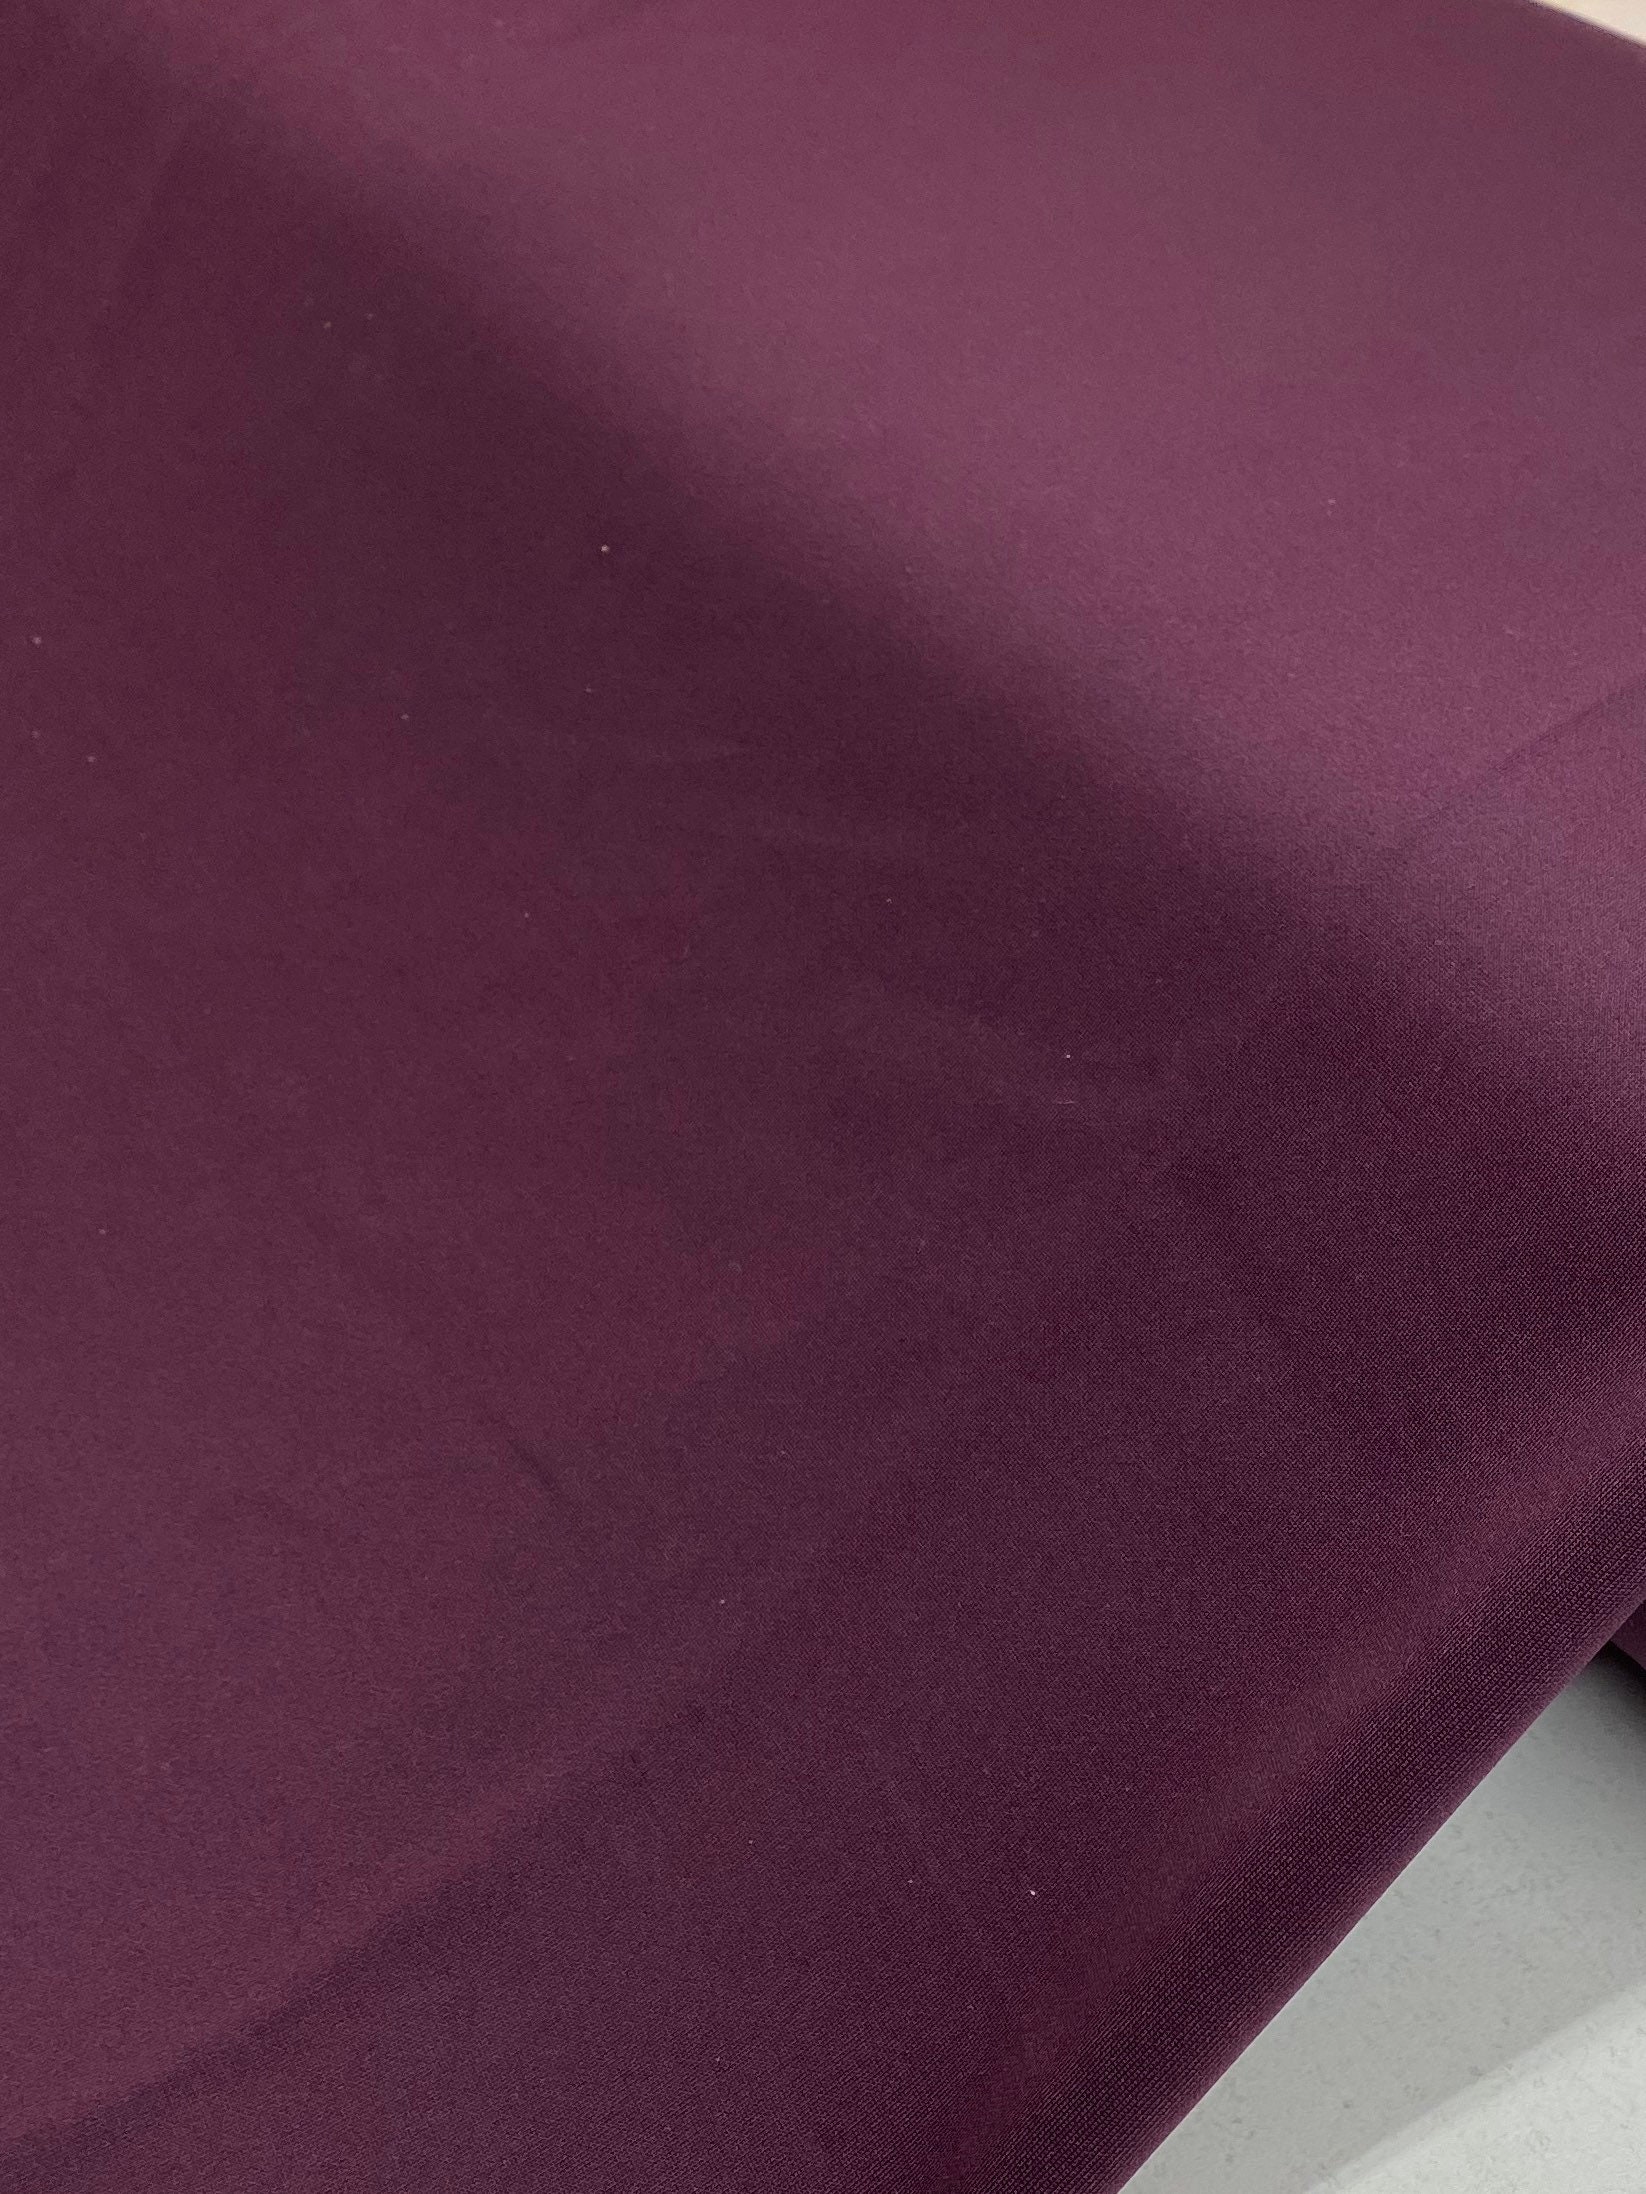 Solid Plum Purple 4 Way Stretch MATTE SWIM Knit Fabric Fabric